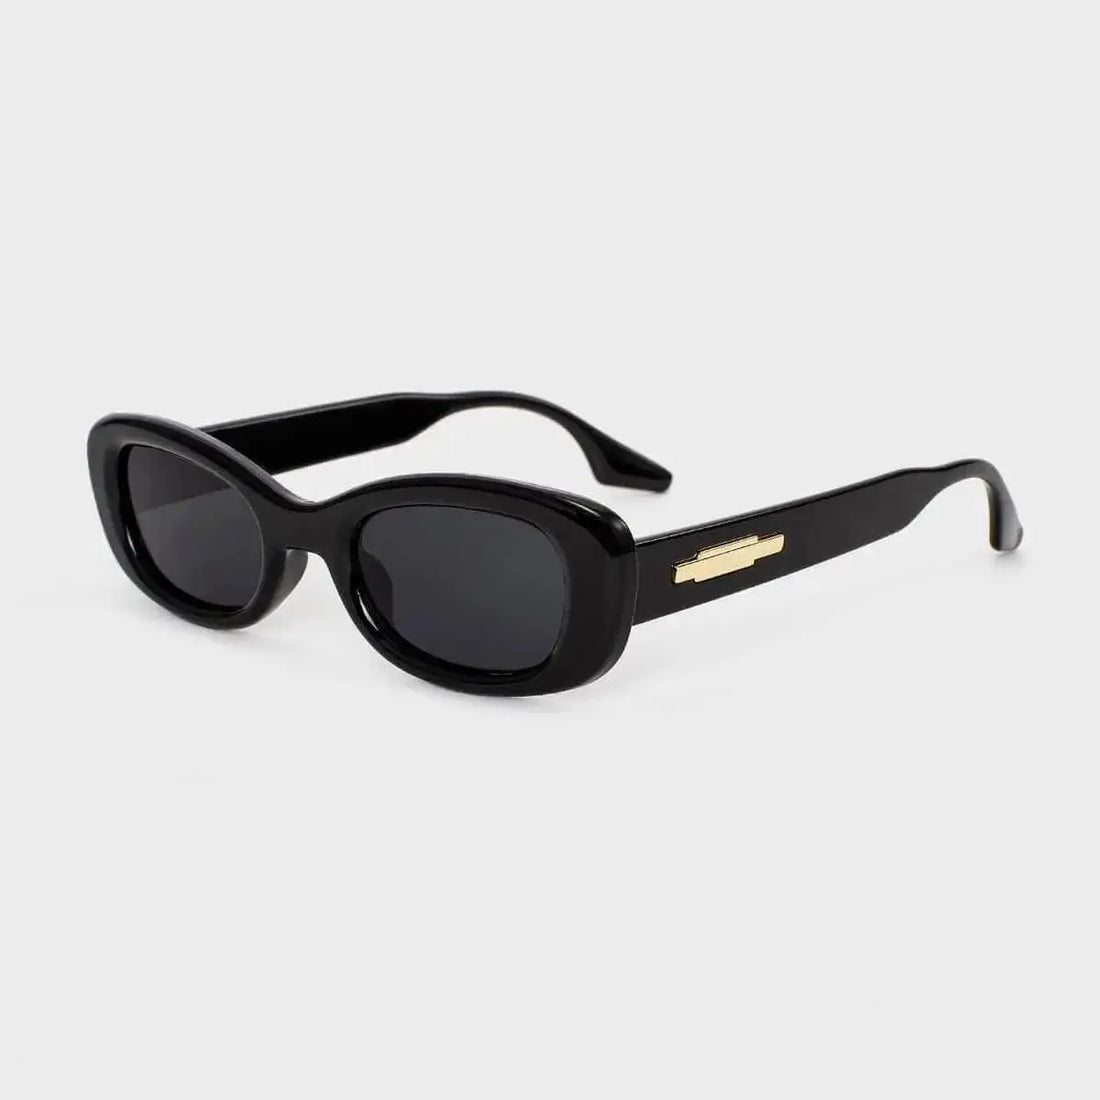 Dakota Johnson Fashion Sunglasses Madison Avenue Sunglasses 